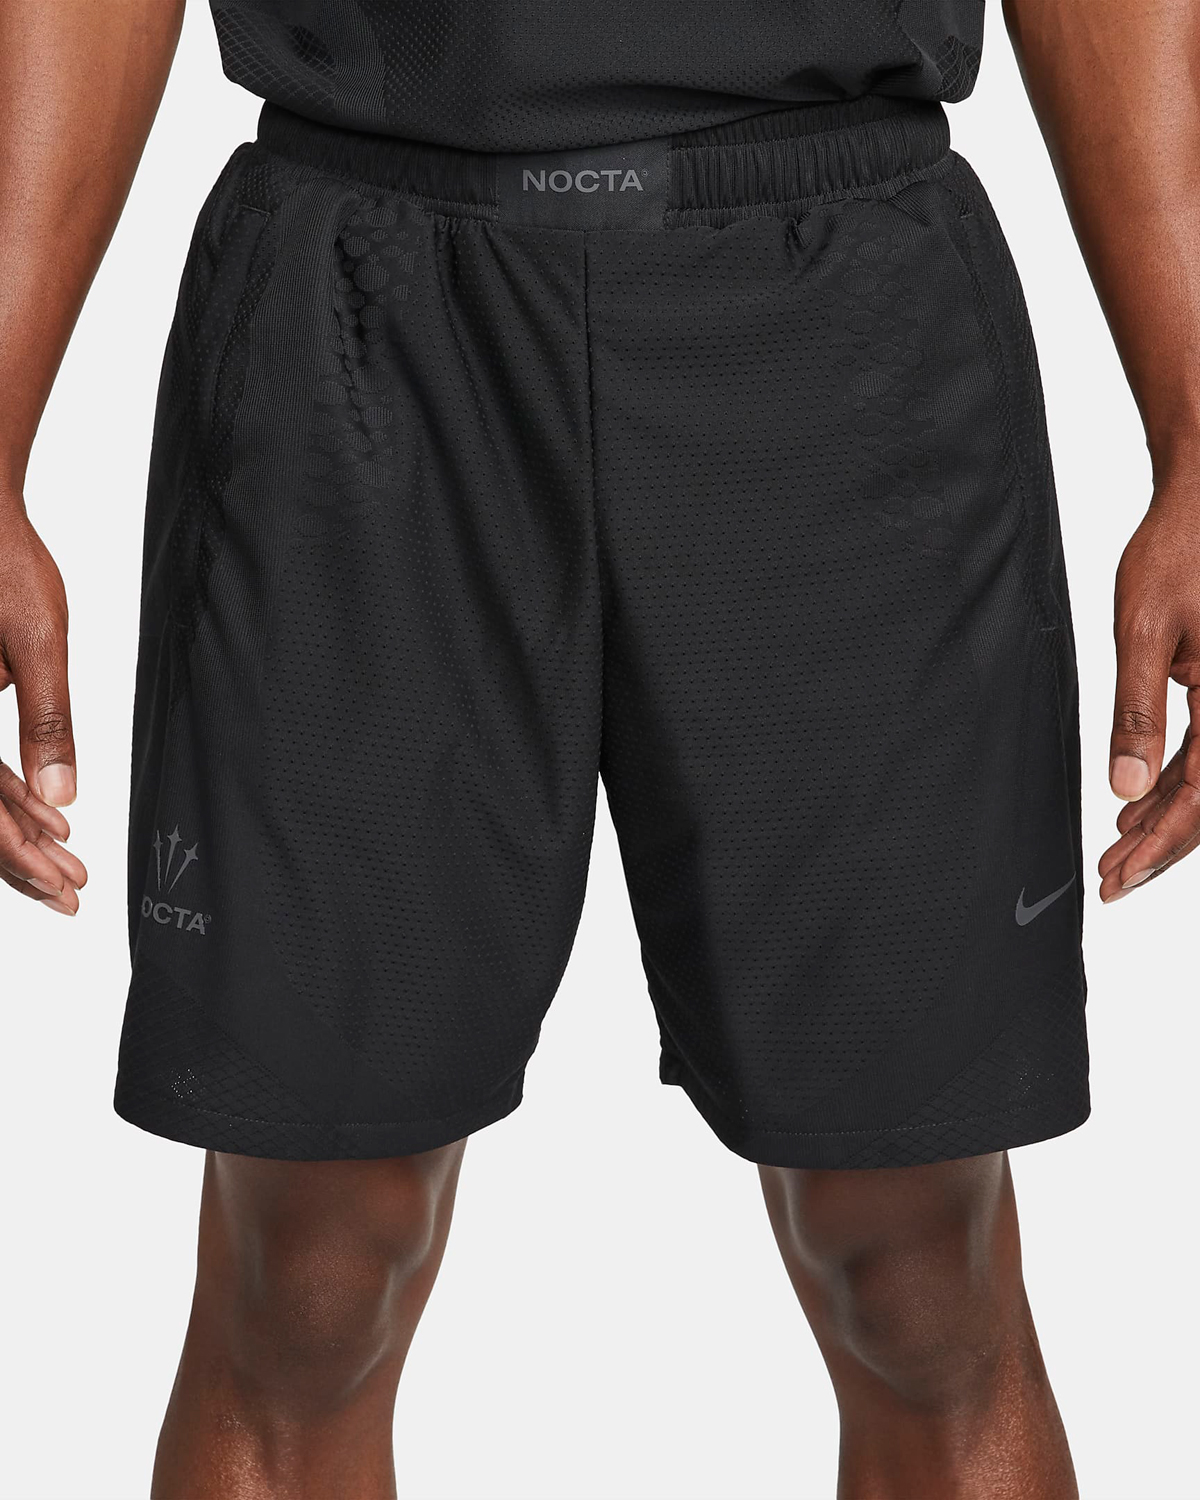 Drake-NOCTA-Nike-Basketball-Shorts-Black-1